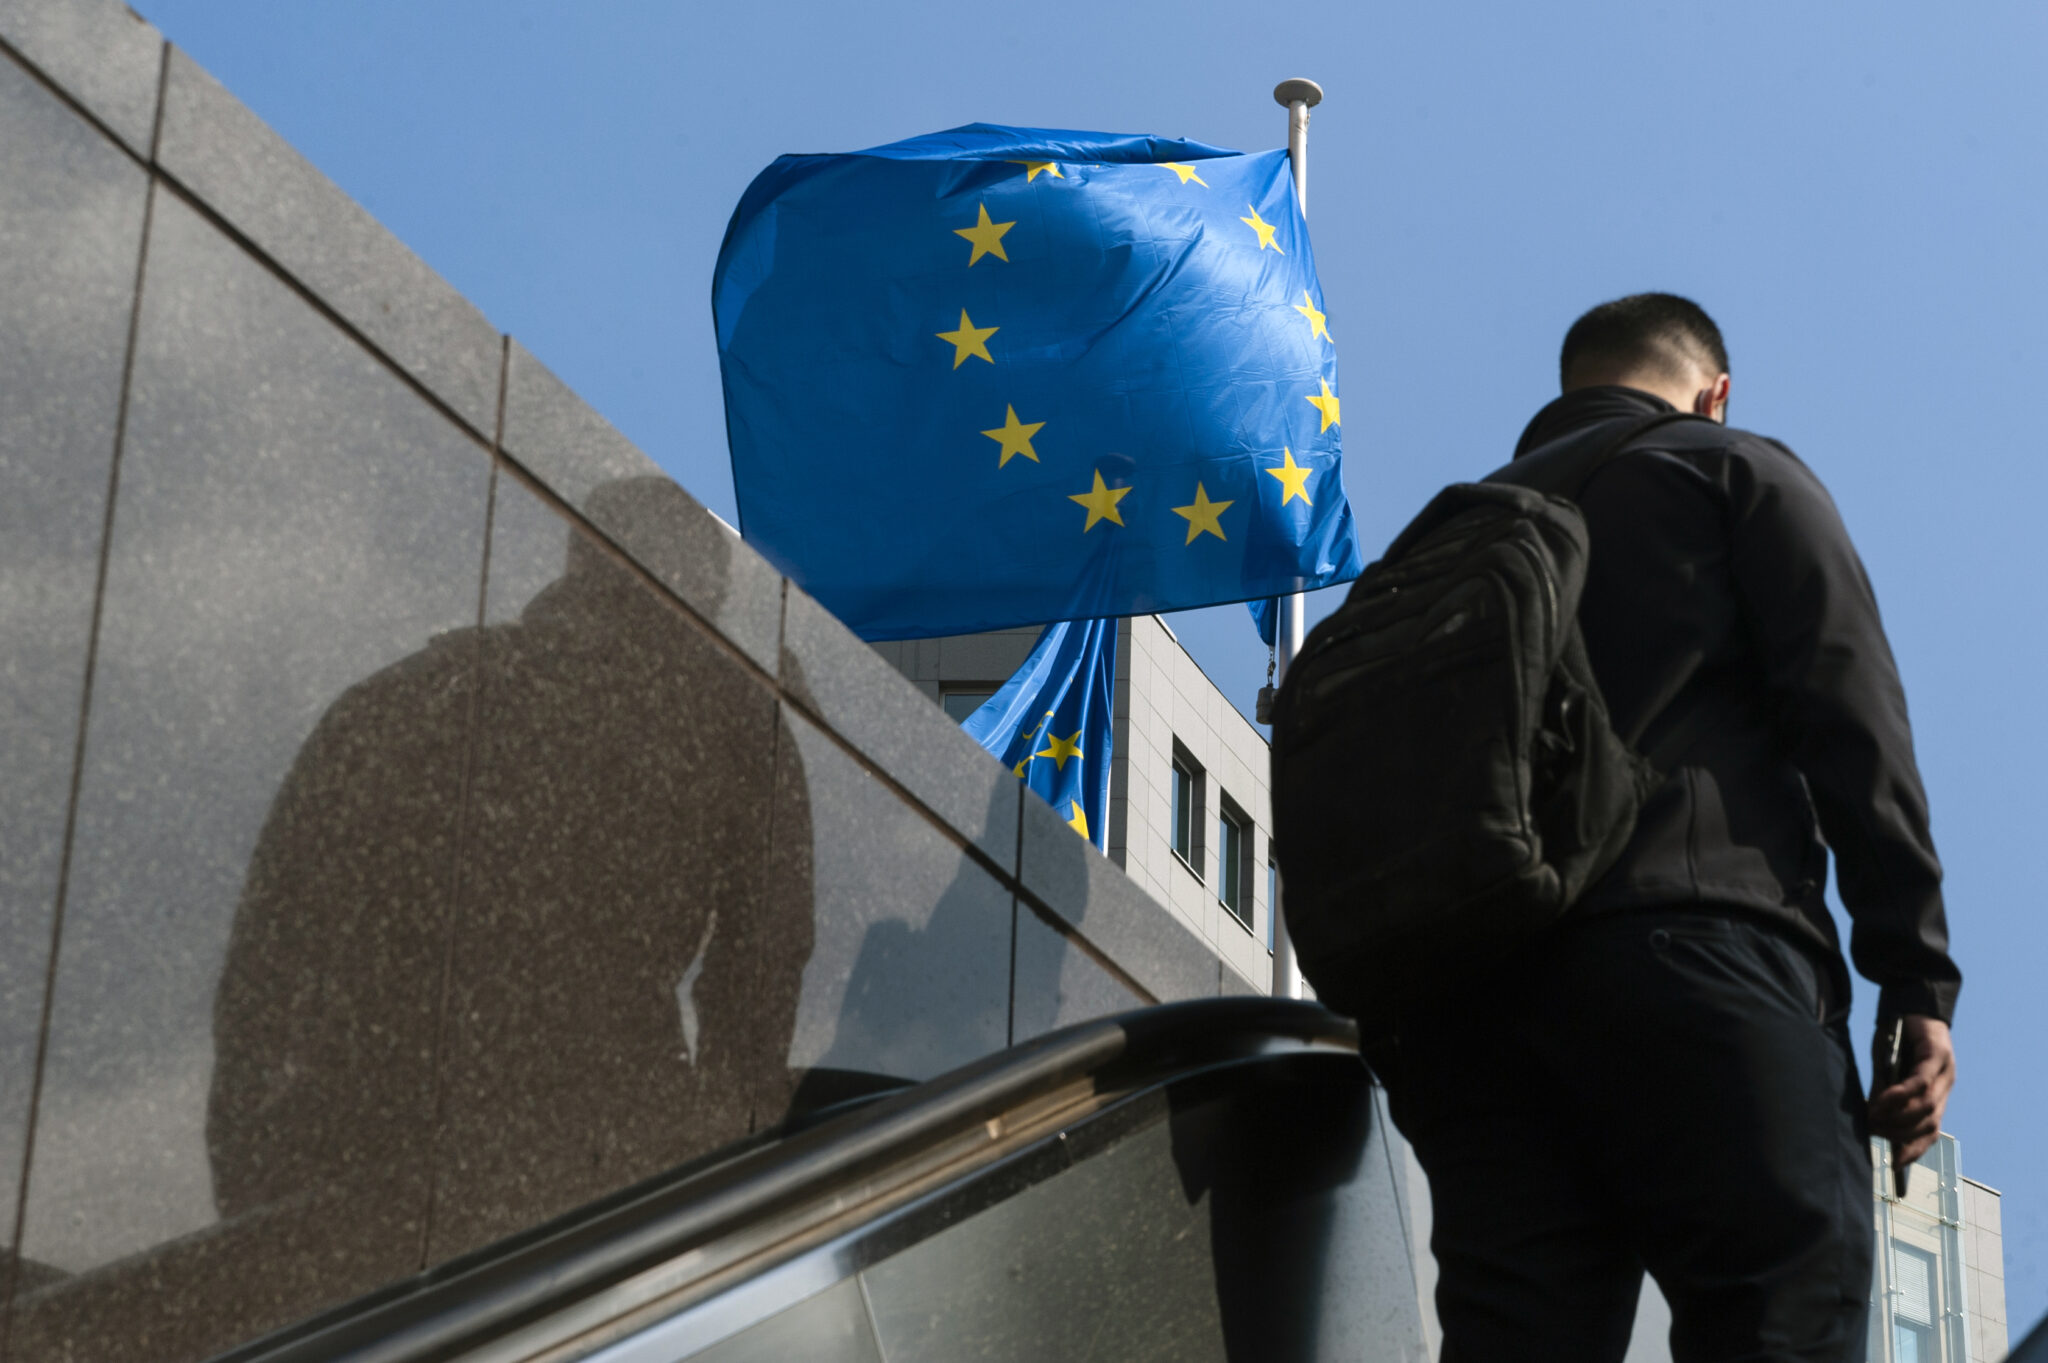 Флаг рядом со зданием Европейского парламента. Фото Nicolas Landemard / TASS / Scanpix / Leta